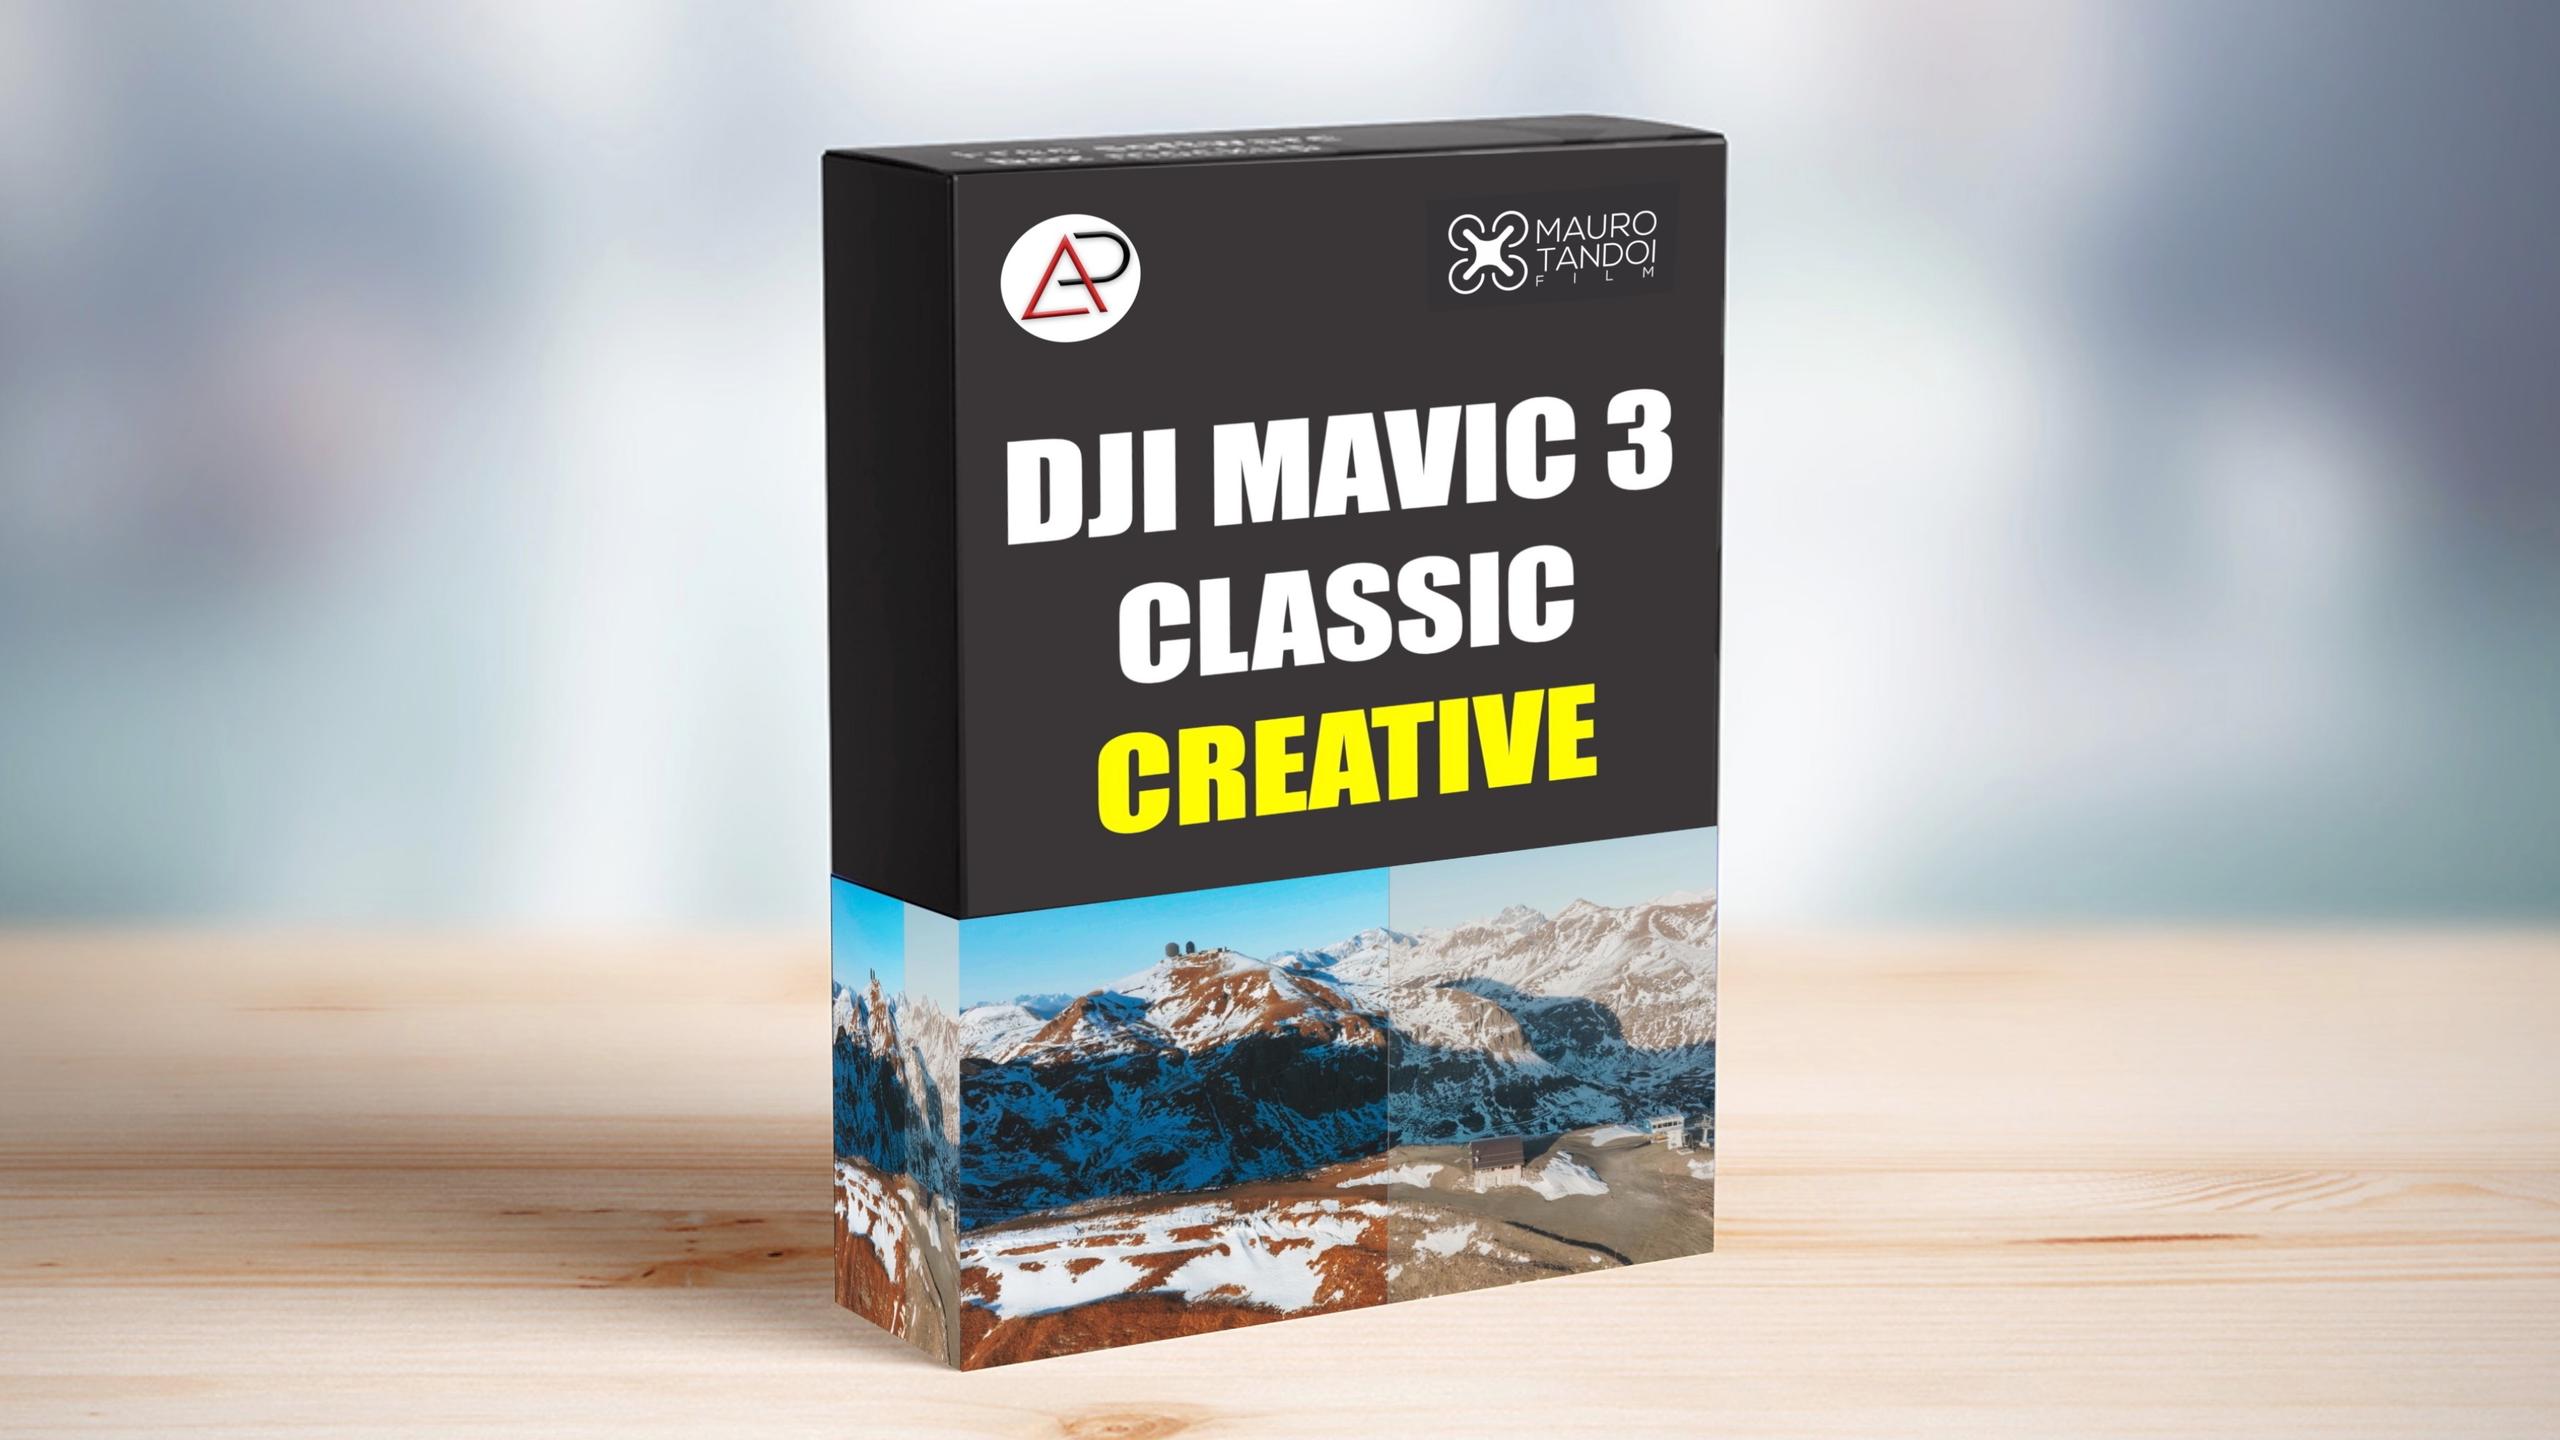 DJI MAVIC 3 CLASSIC LUT CREATIVE